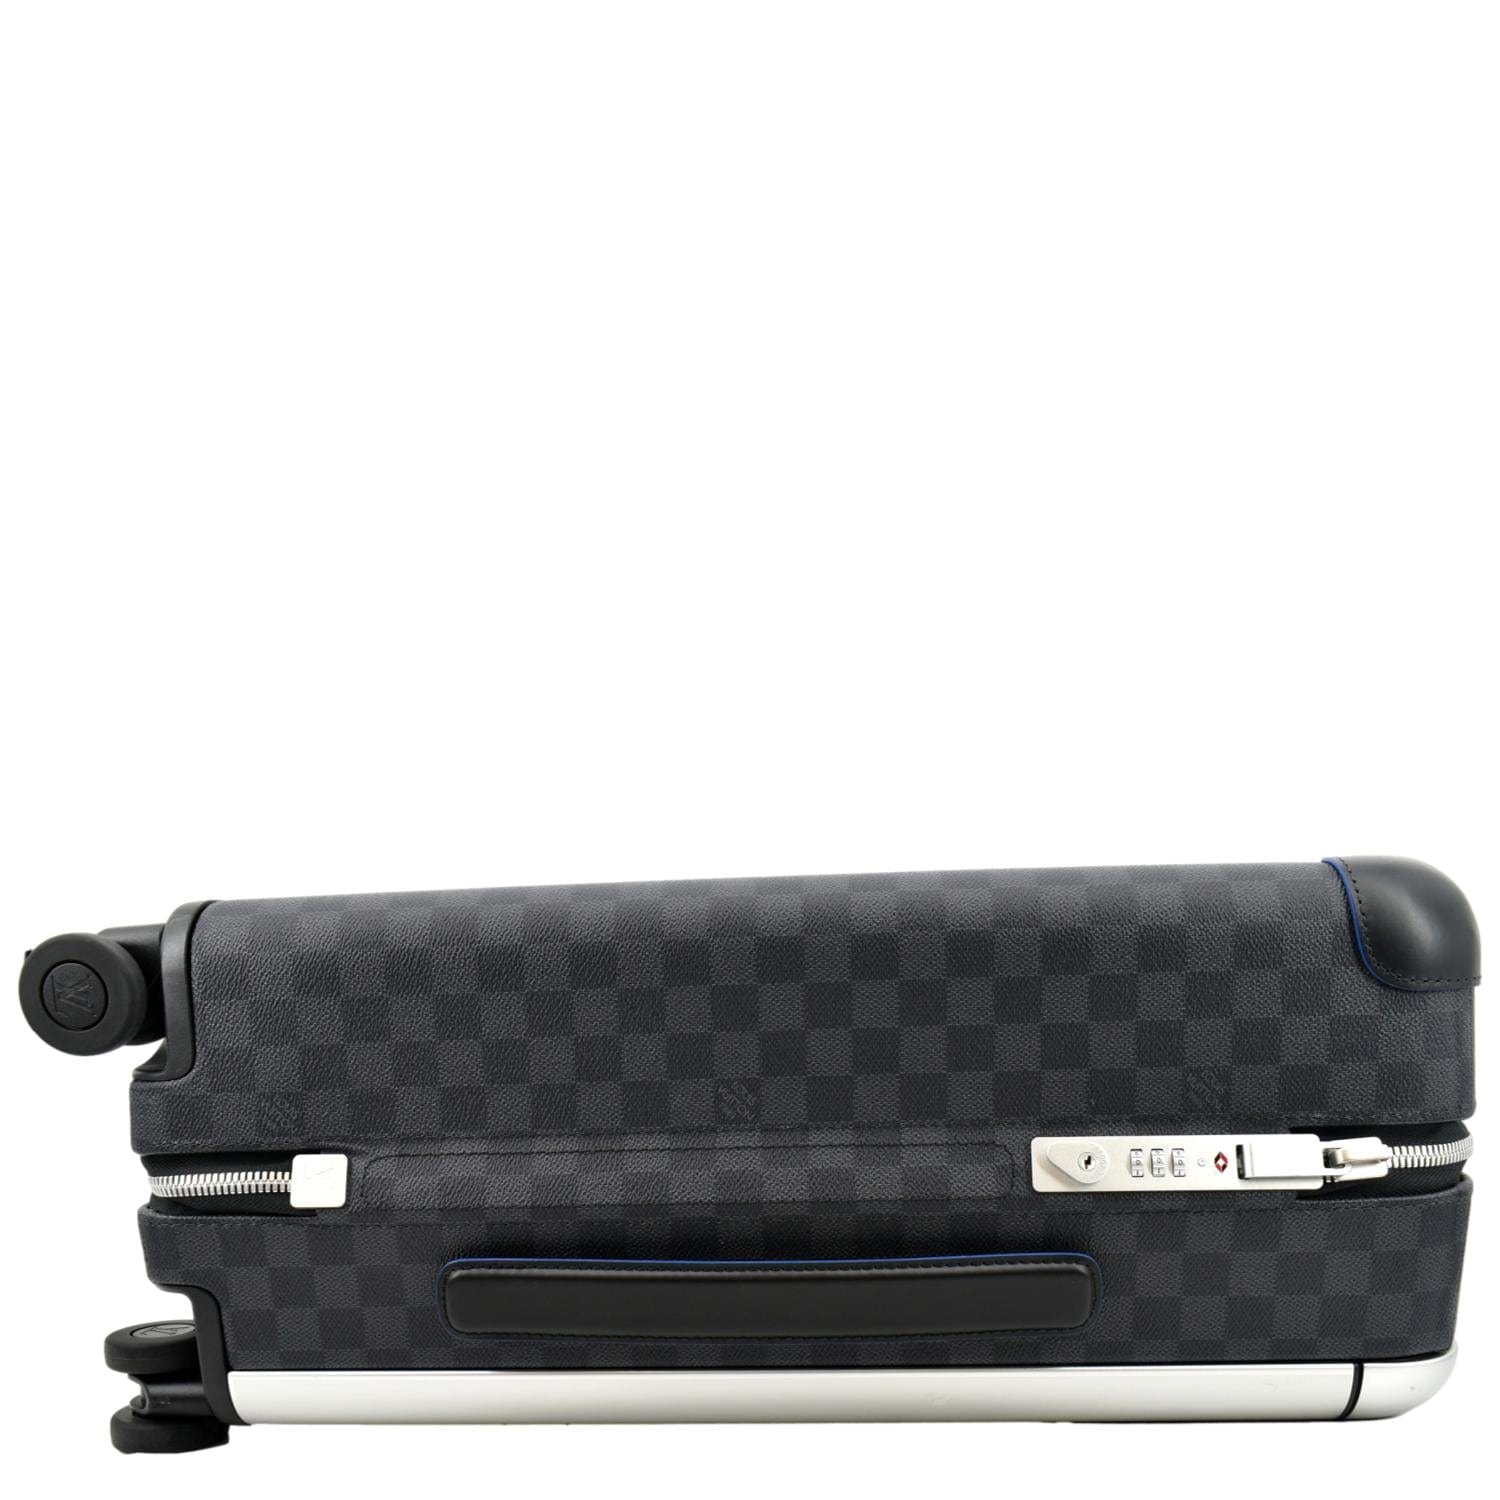 Louis Vuitton Pre-owned Horizon Clutch Bag - Black